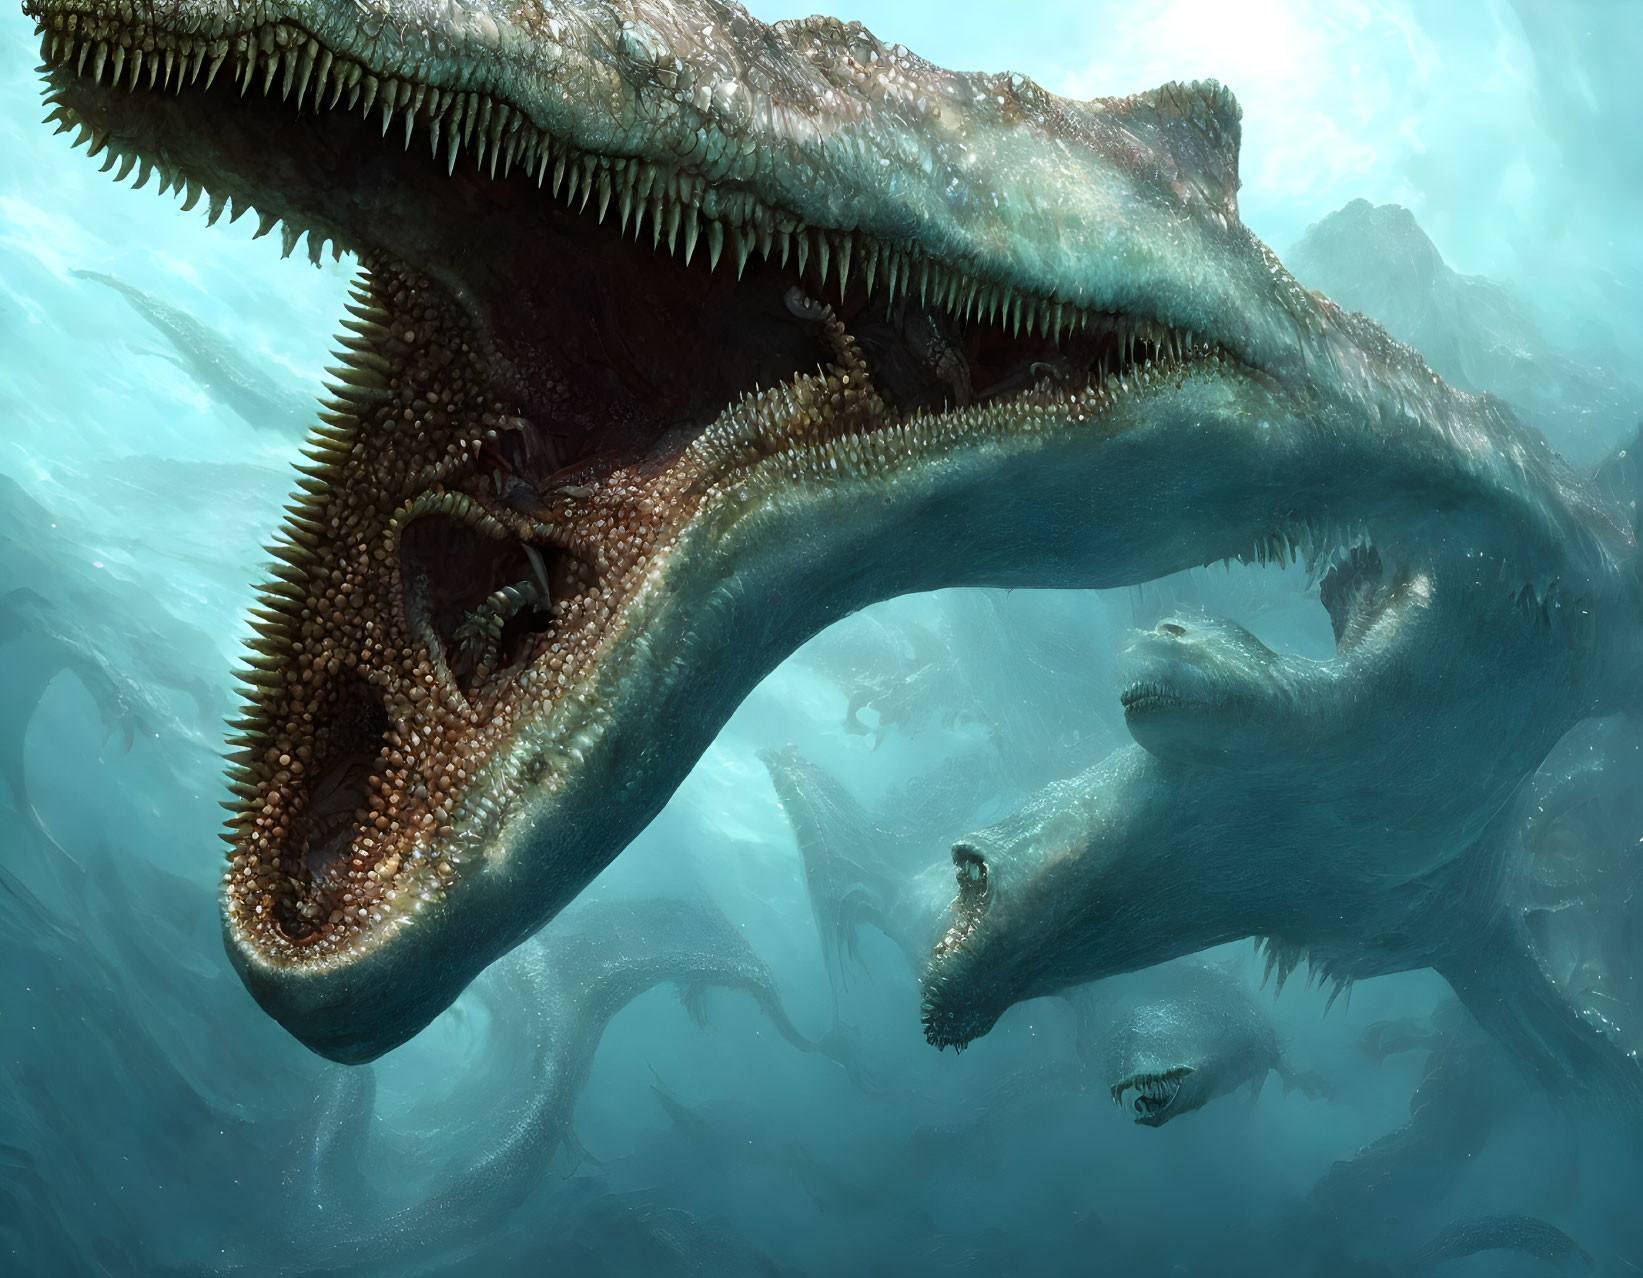 Giant underwater predator with textured skin and sharp teeth in blue ocean scene